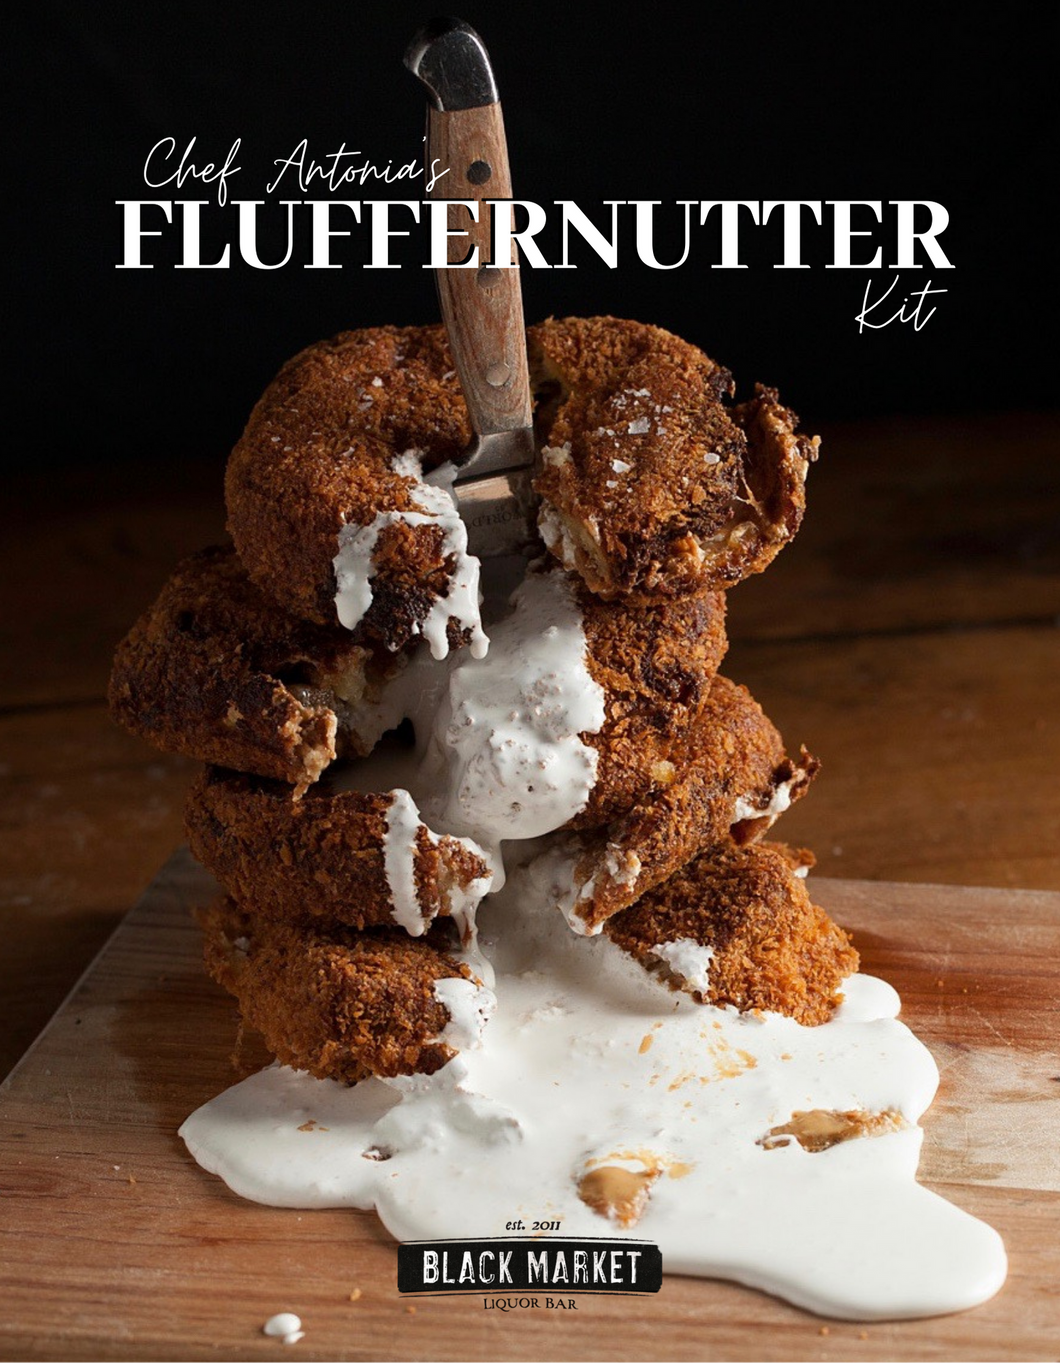 Fluffernutter Kit